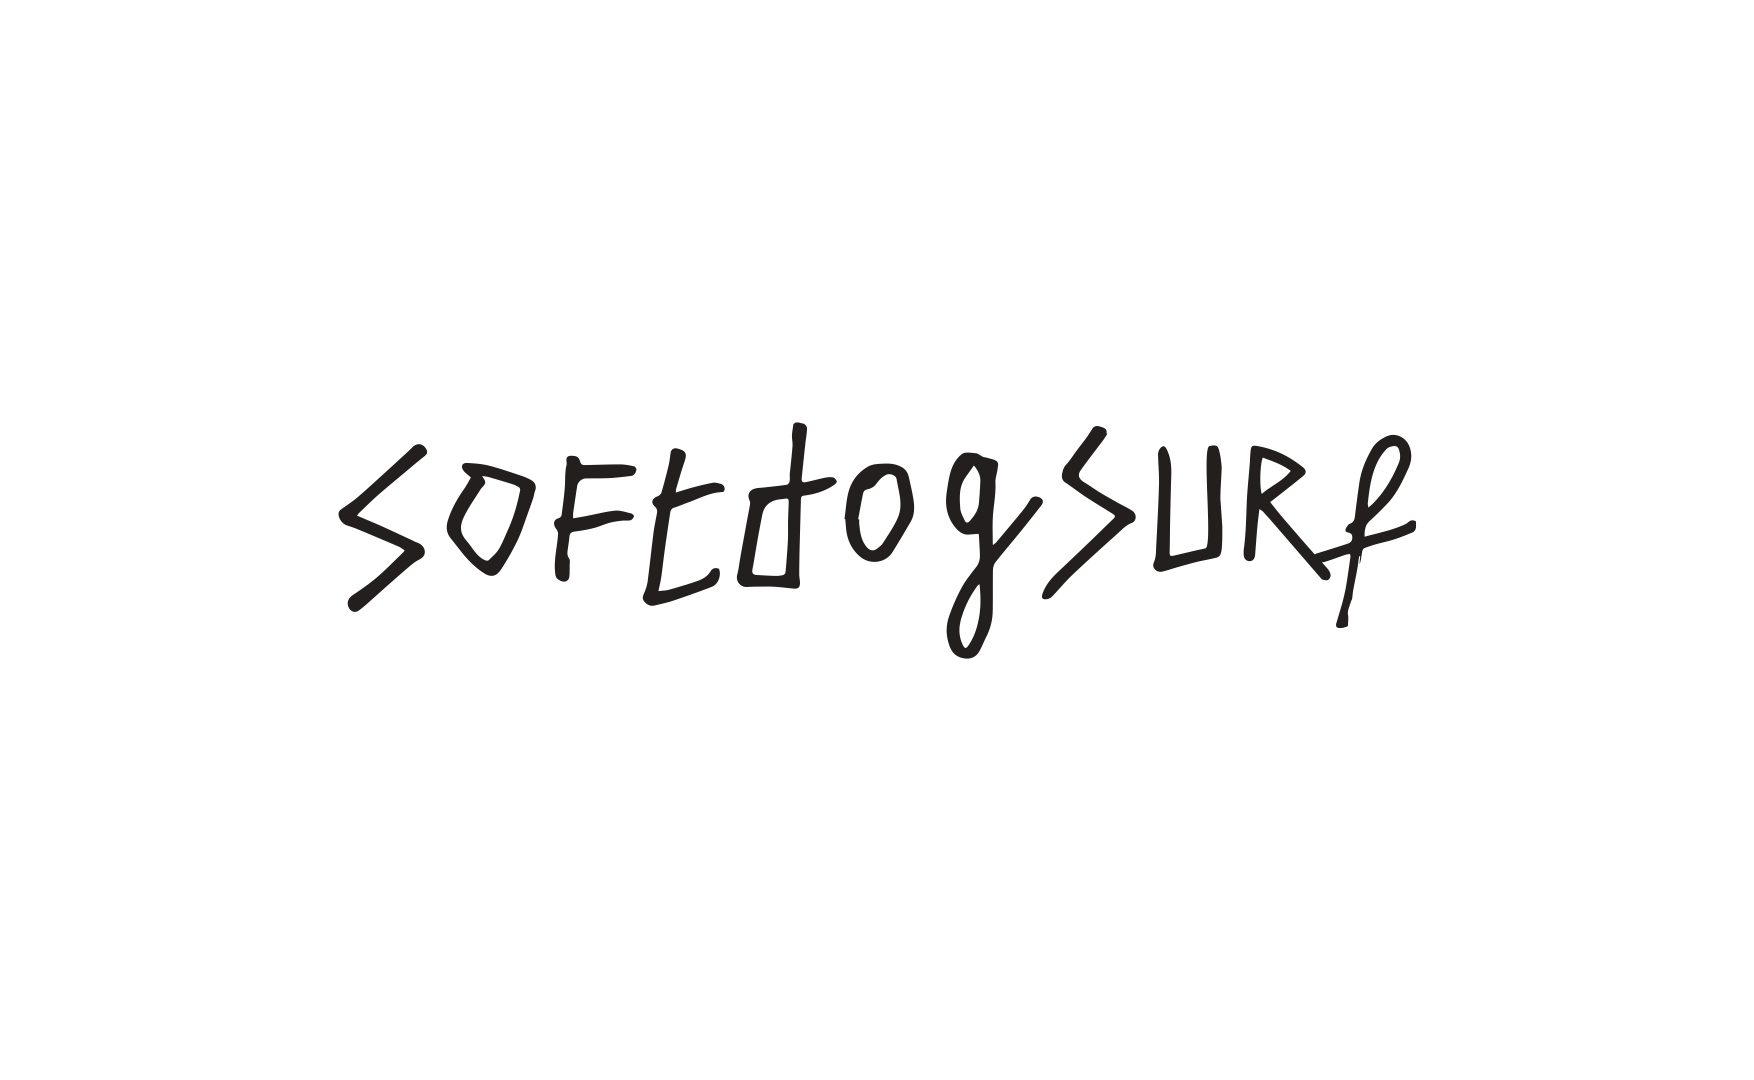 Softdogsurf Soft Top Surfboards Surf 